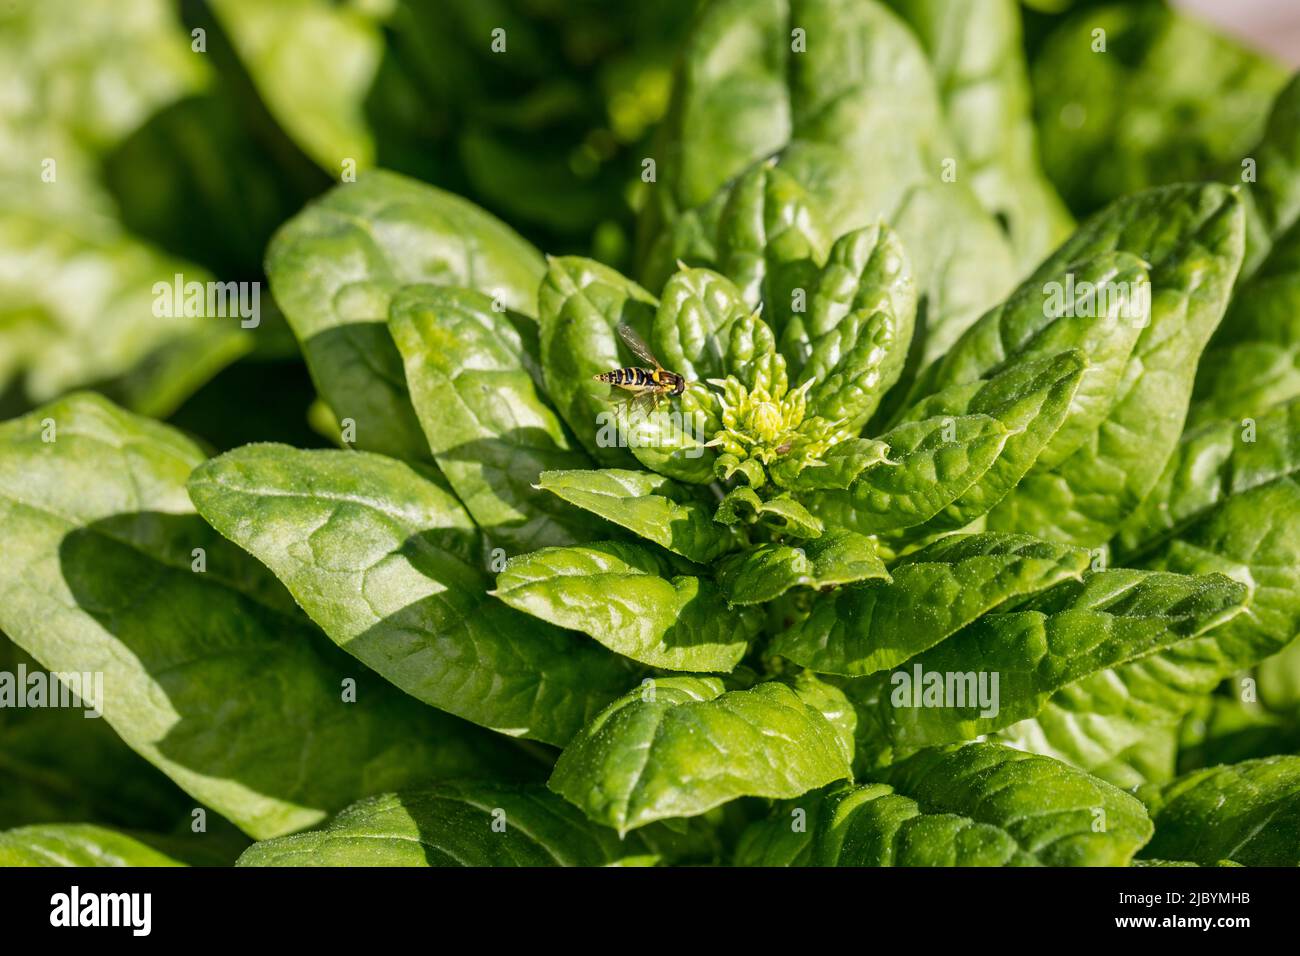 'Gigante d'inverno, géant de l'hiver' Spinach, Spenat (Spinacia oleracea) Banque D'Images